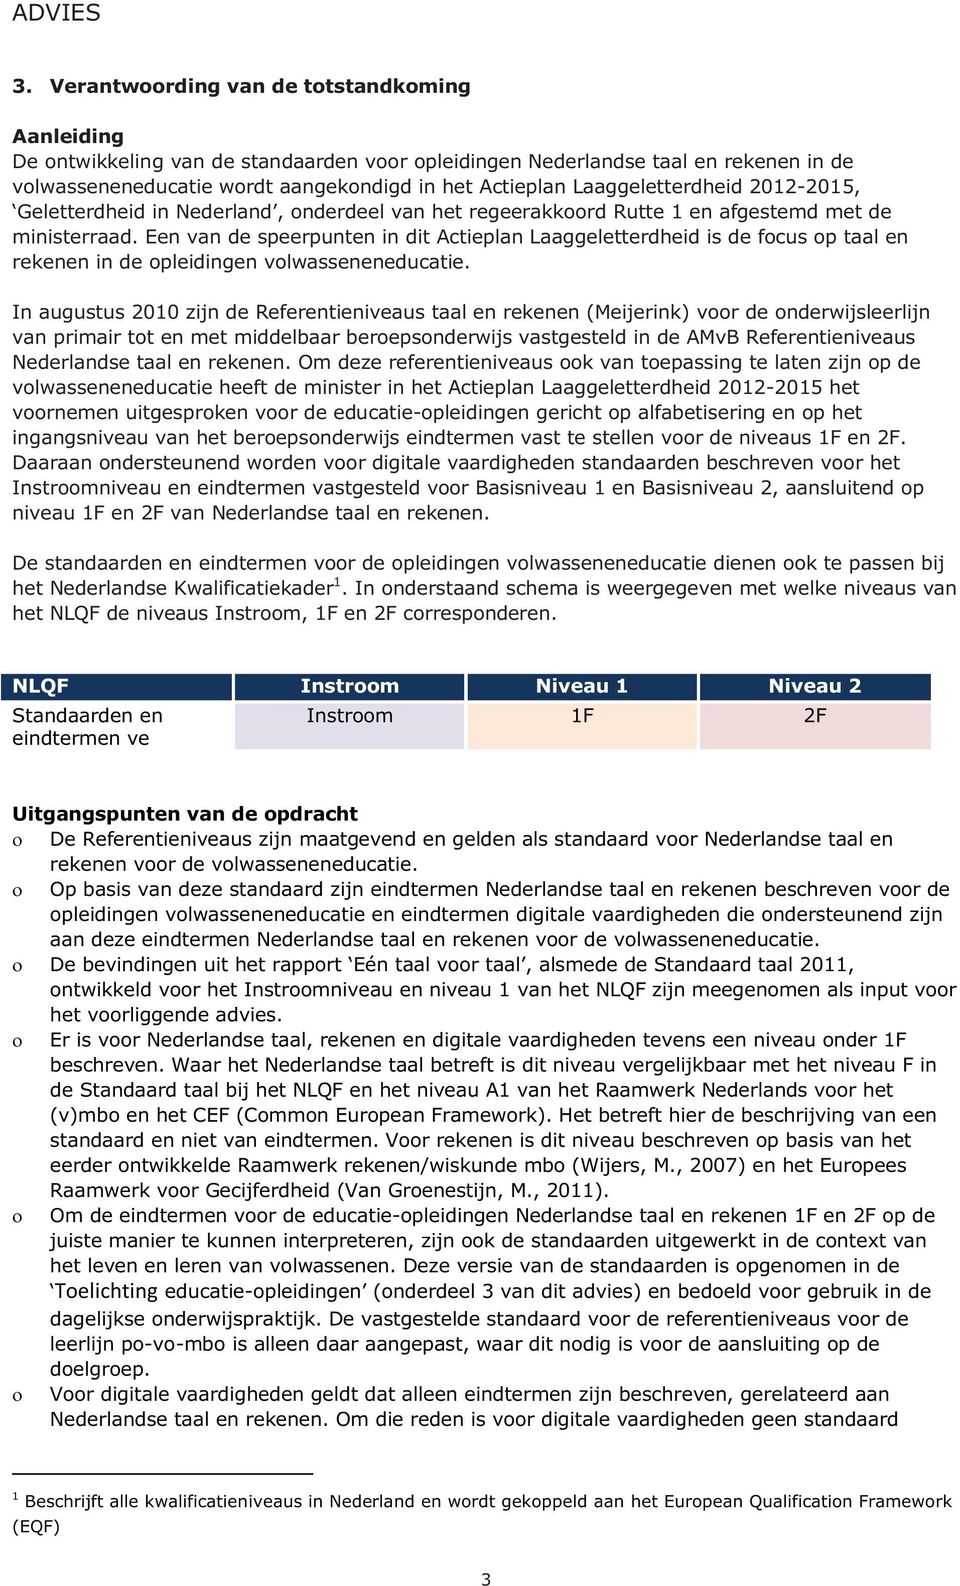 Laaggeletterdheid 2012-2015, Geletterdheid in Nederland, onderdeel van het regeerakkoord Rutte 1 en afgestemd met de ministerraad.